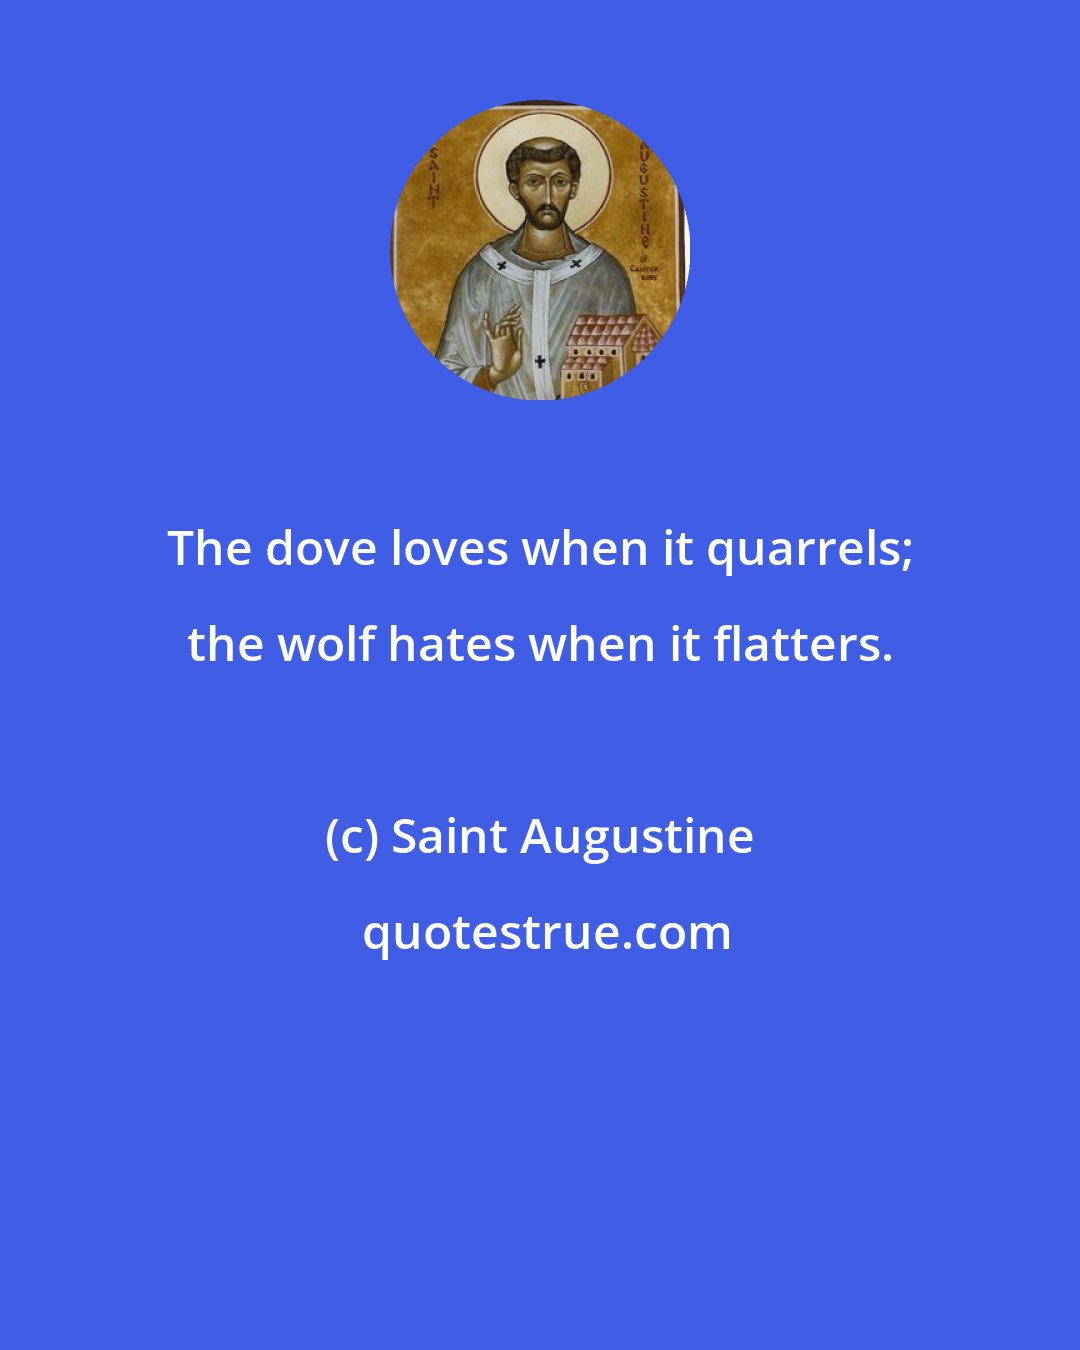 Saint Augustine: The dove loves when it quarrels; the wolf hates when it flatters.